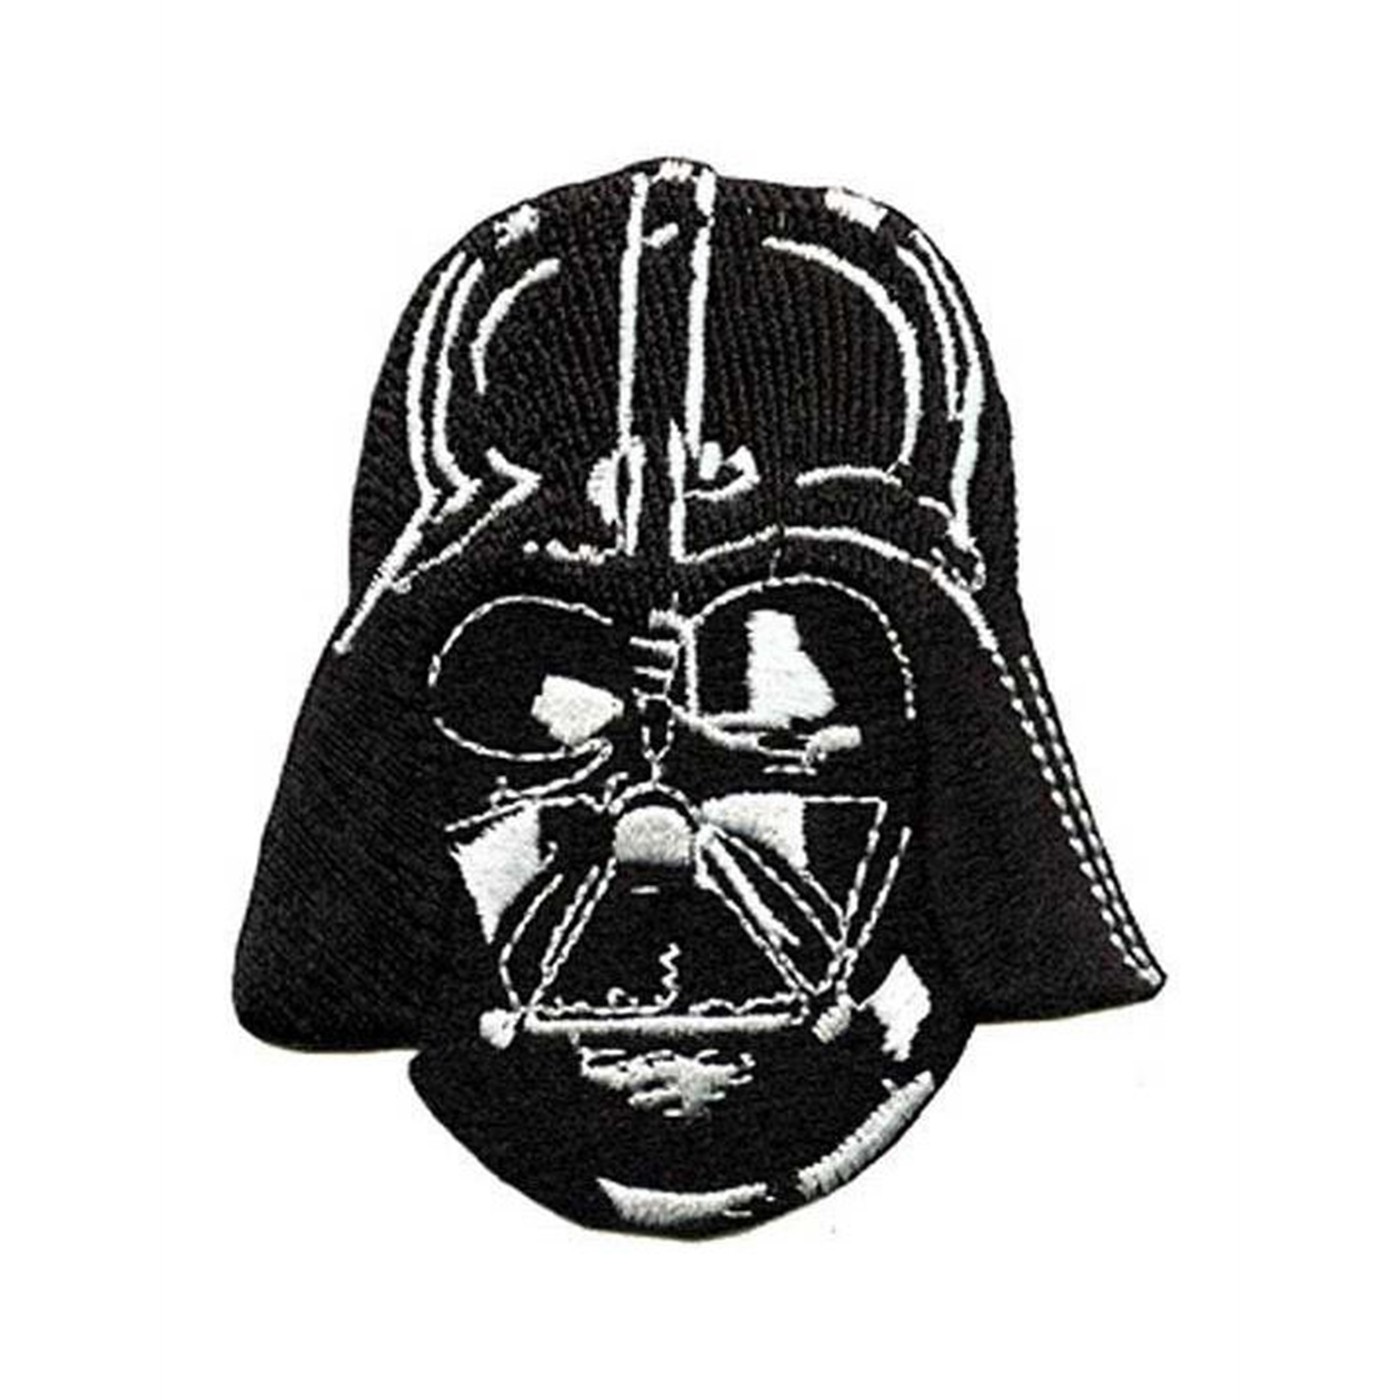 Darth Vader Head Patch